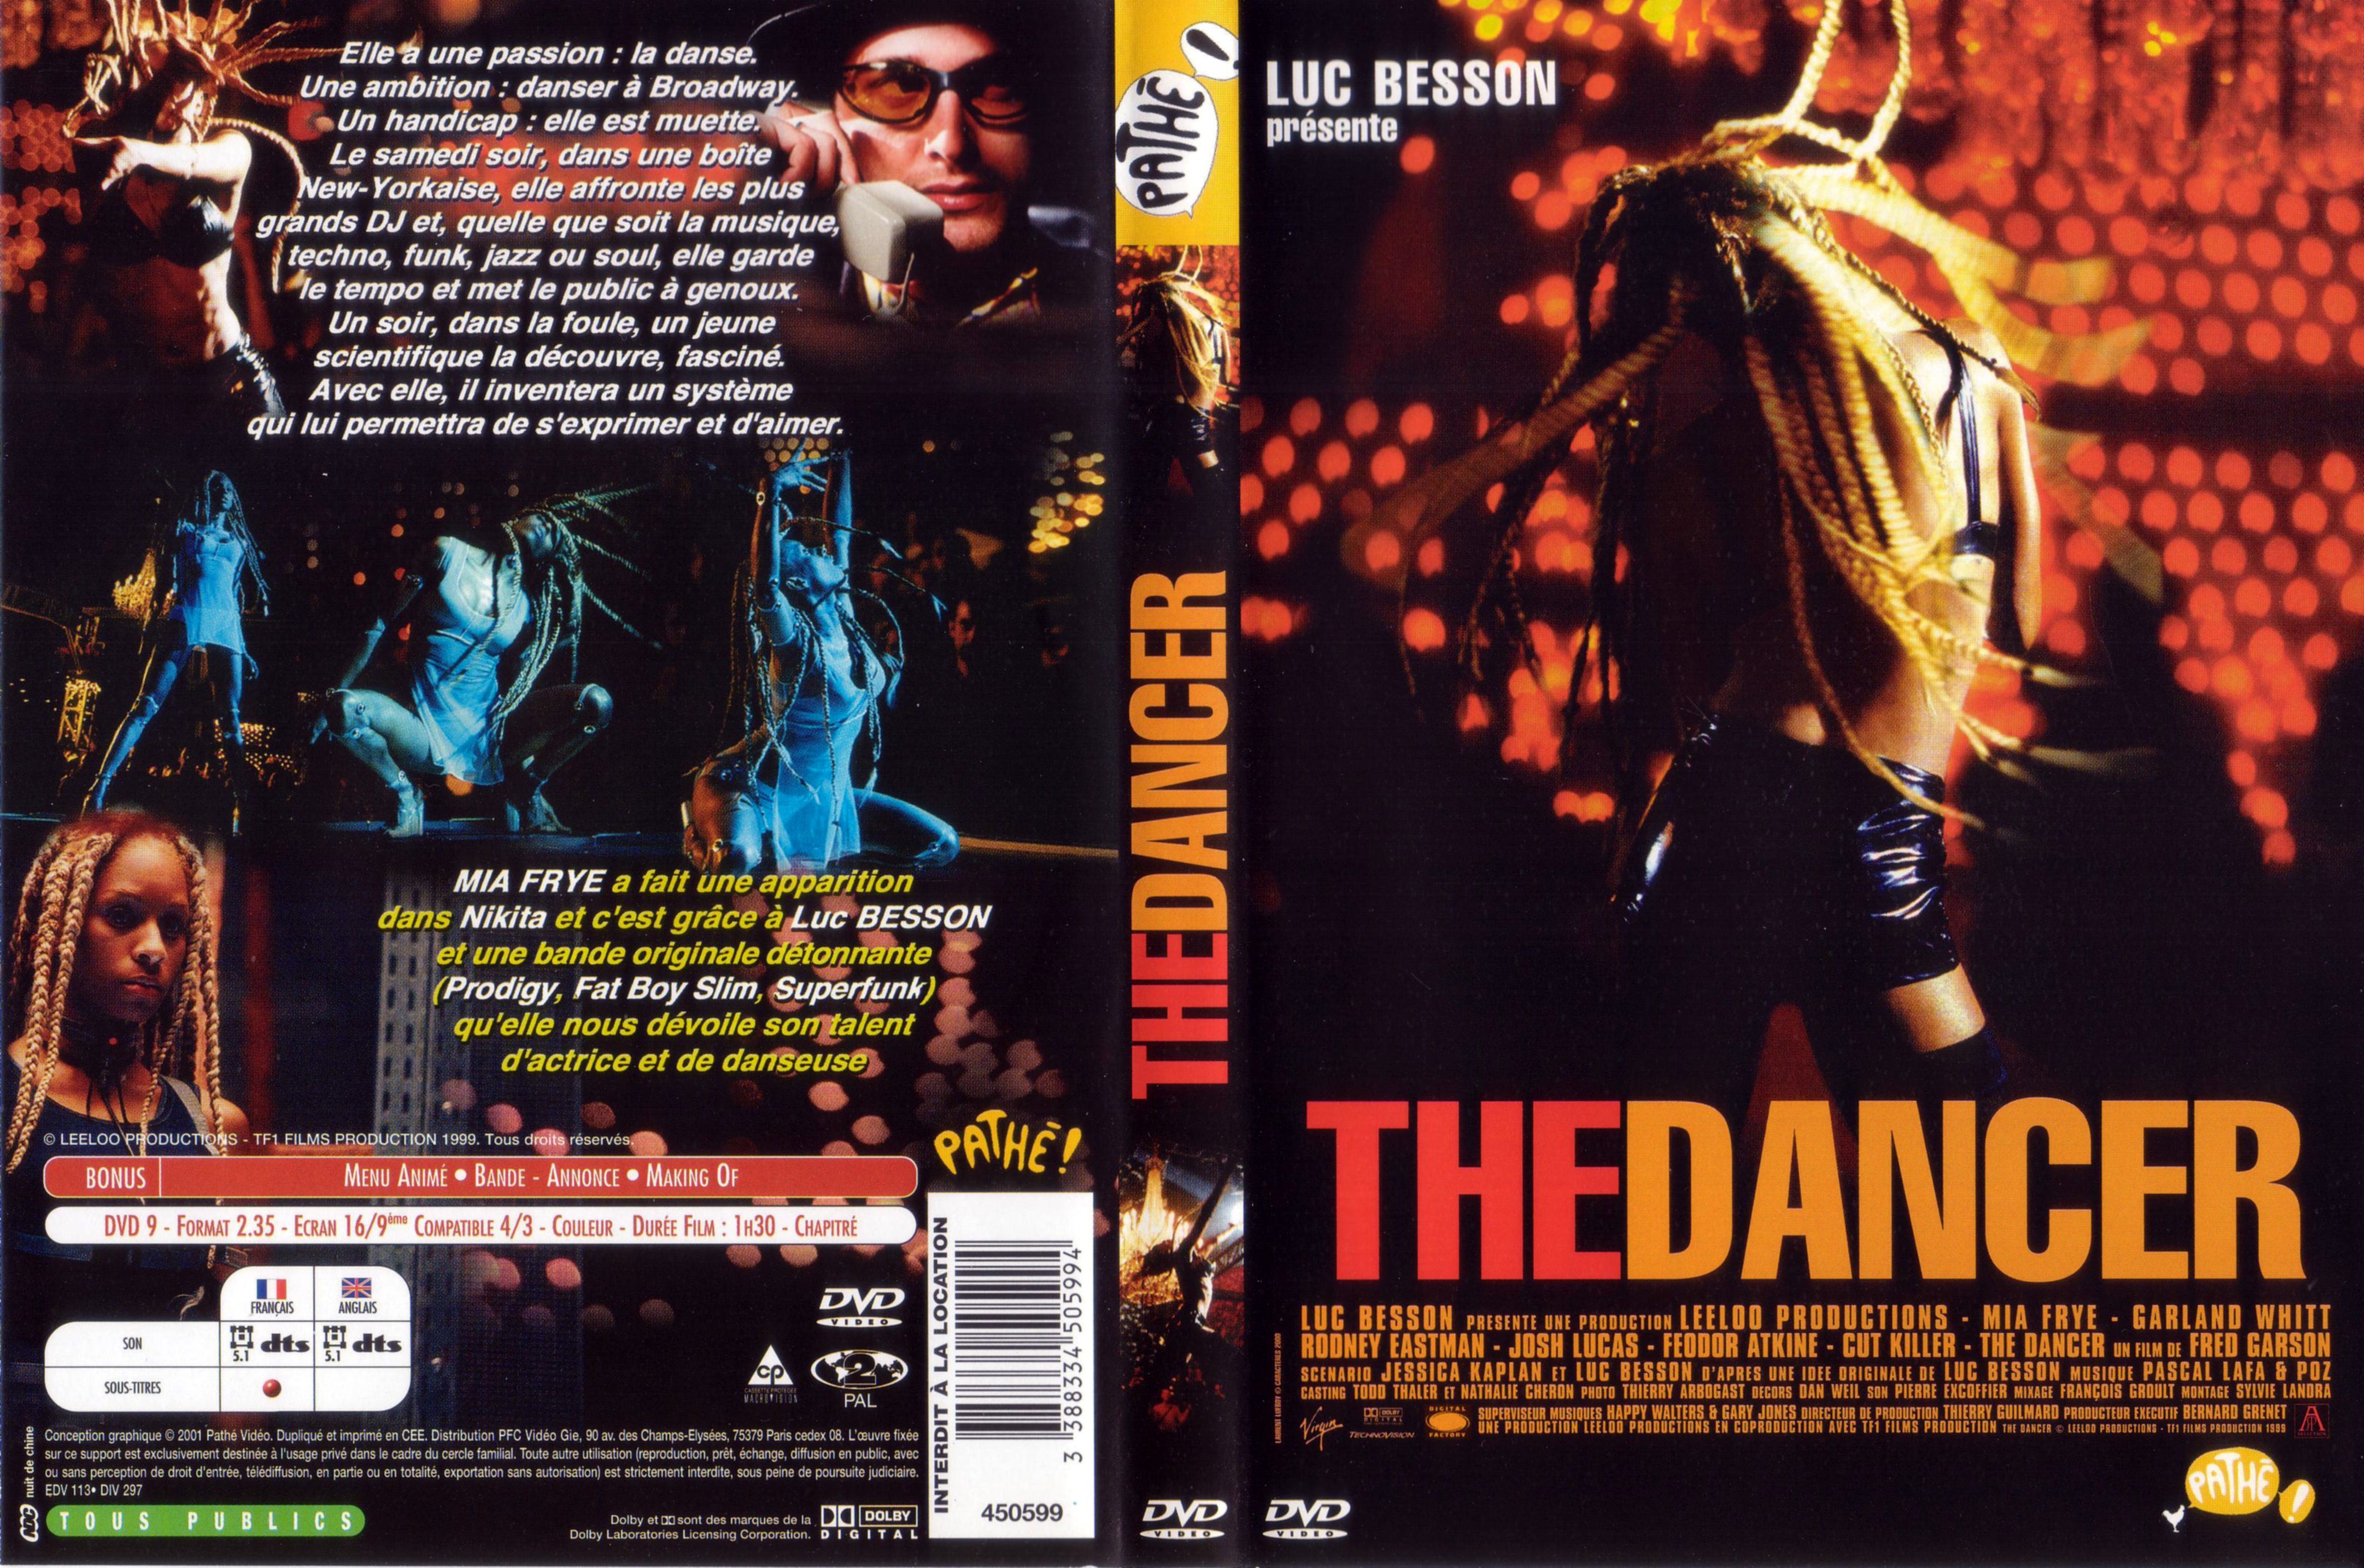 Jaquette DVD The dancer